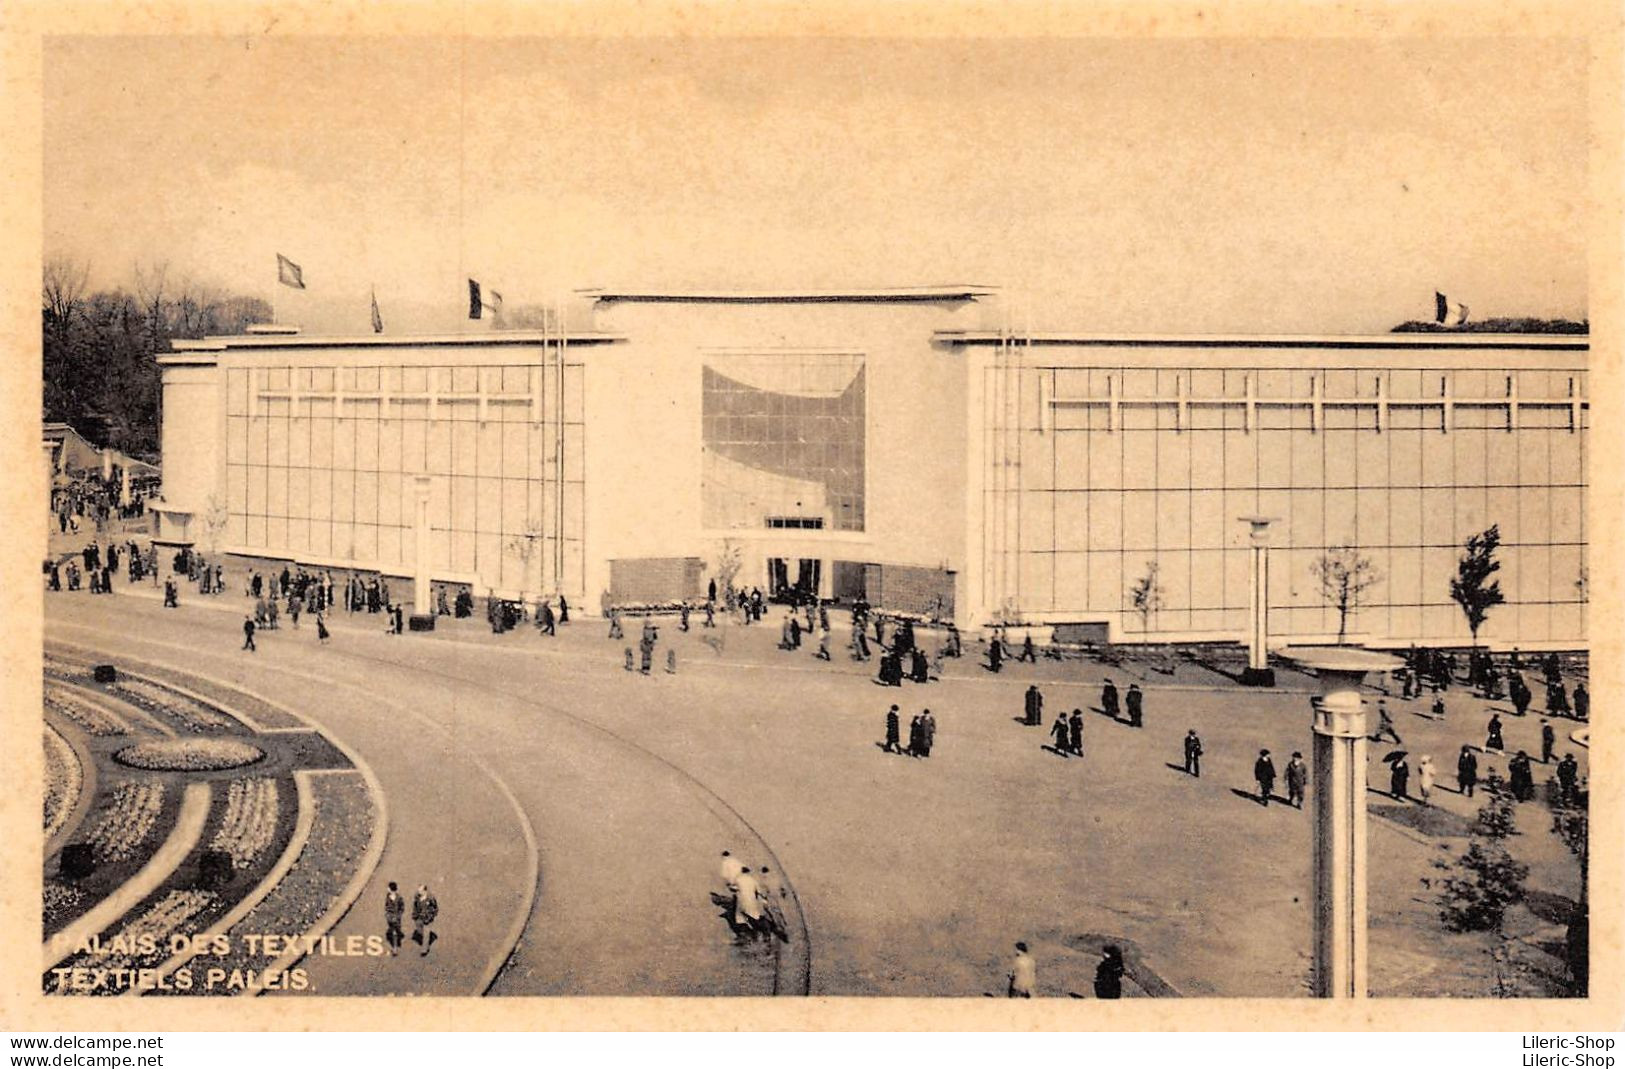 Exposition Universelle 1935 - PALAIS DES TEXTILES / TEXTIELS PALEIS - Wereldtentoonstellingen